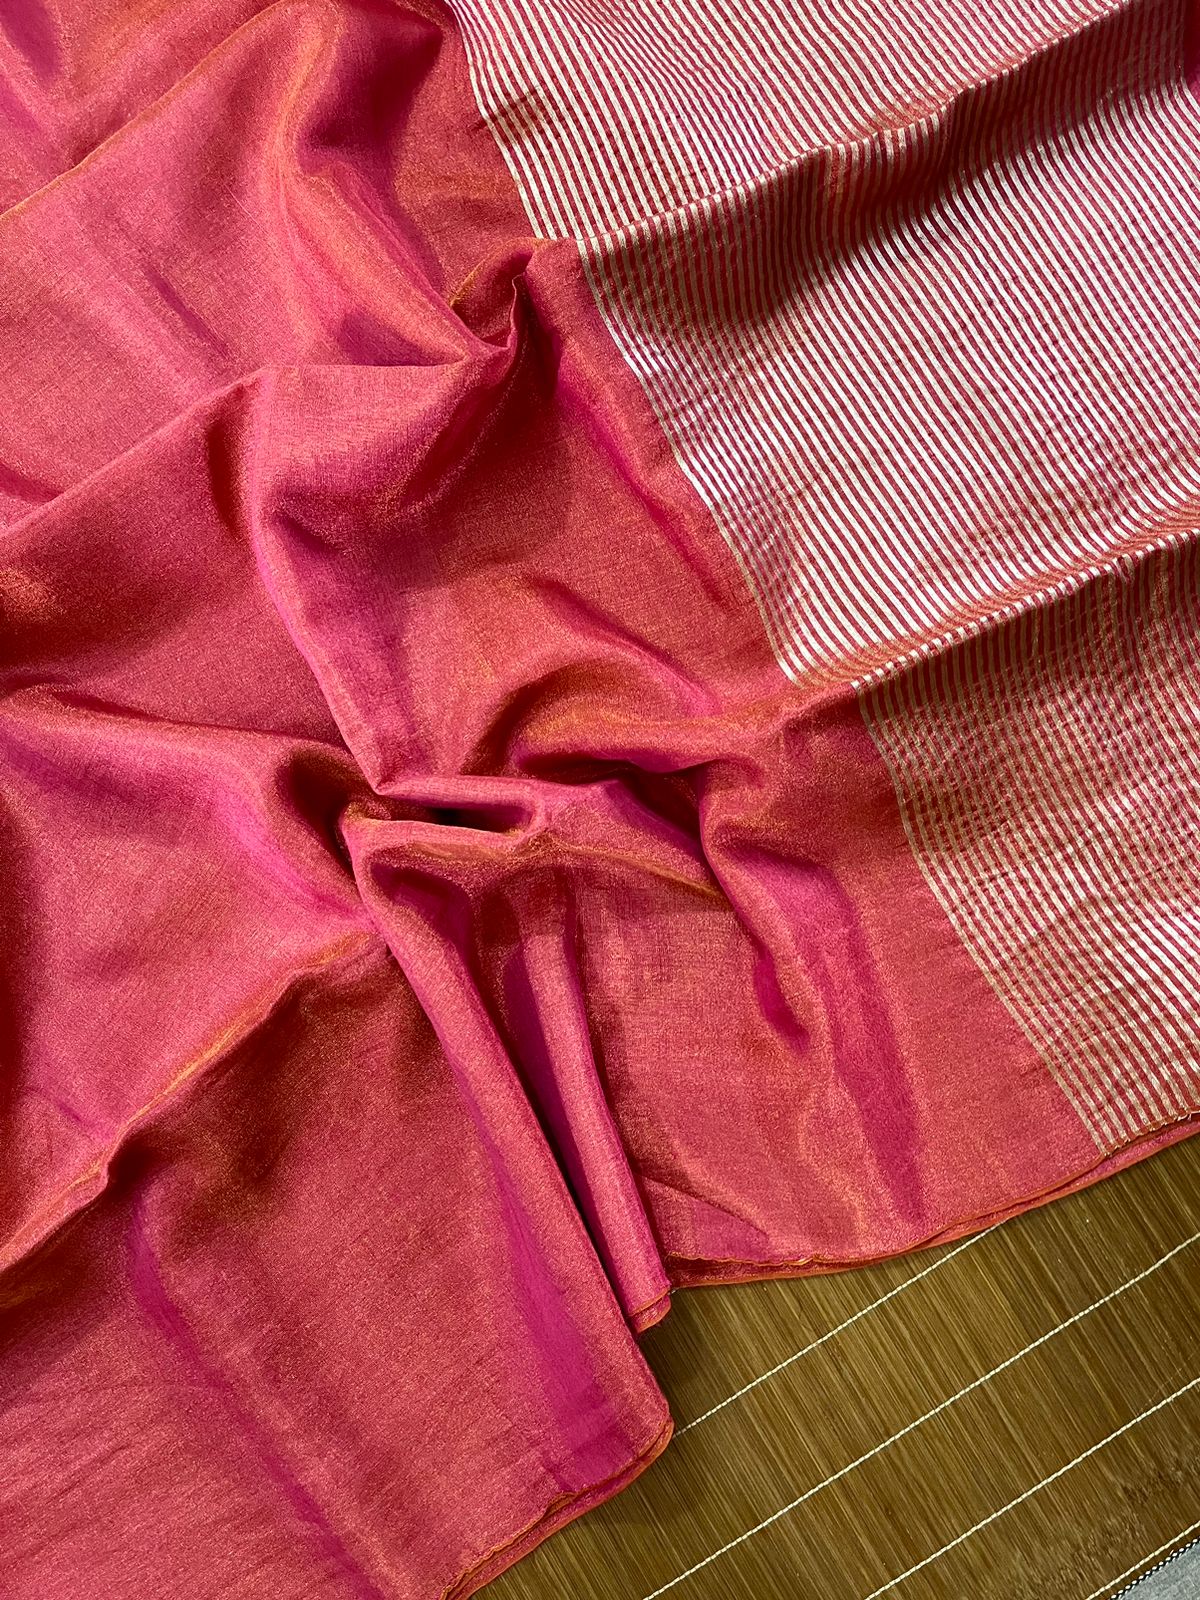 Copper rose pink metallic tissue linen handloom saree